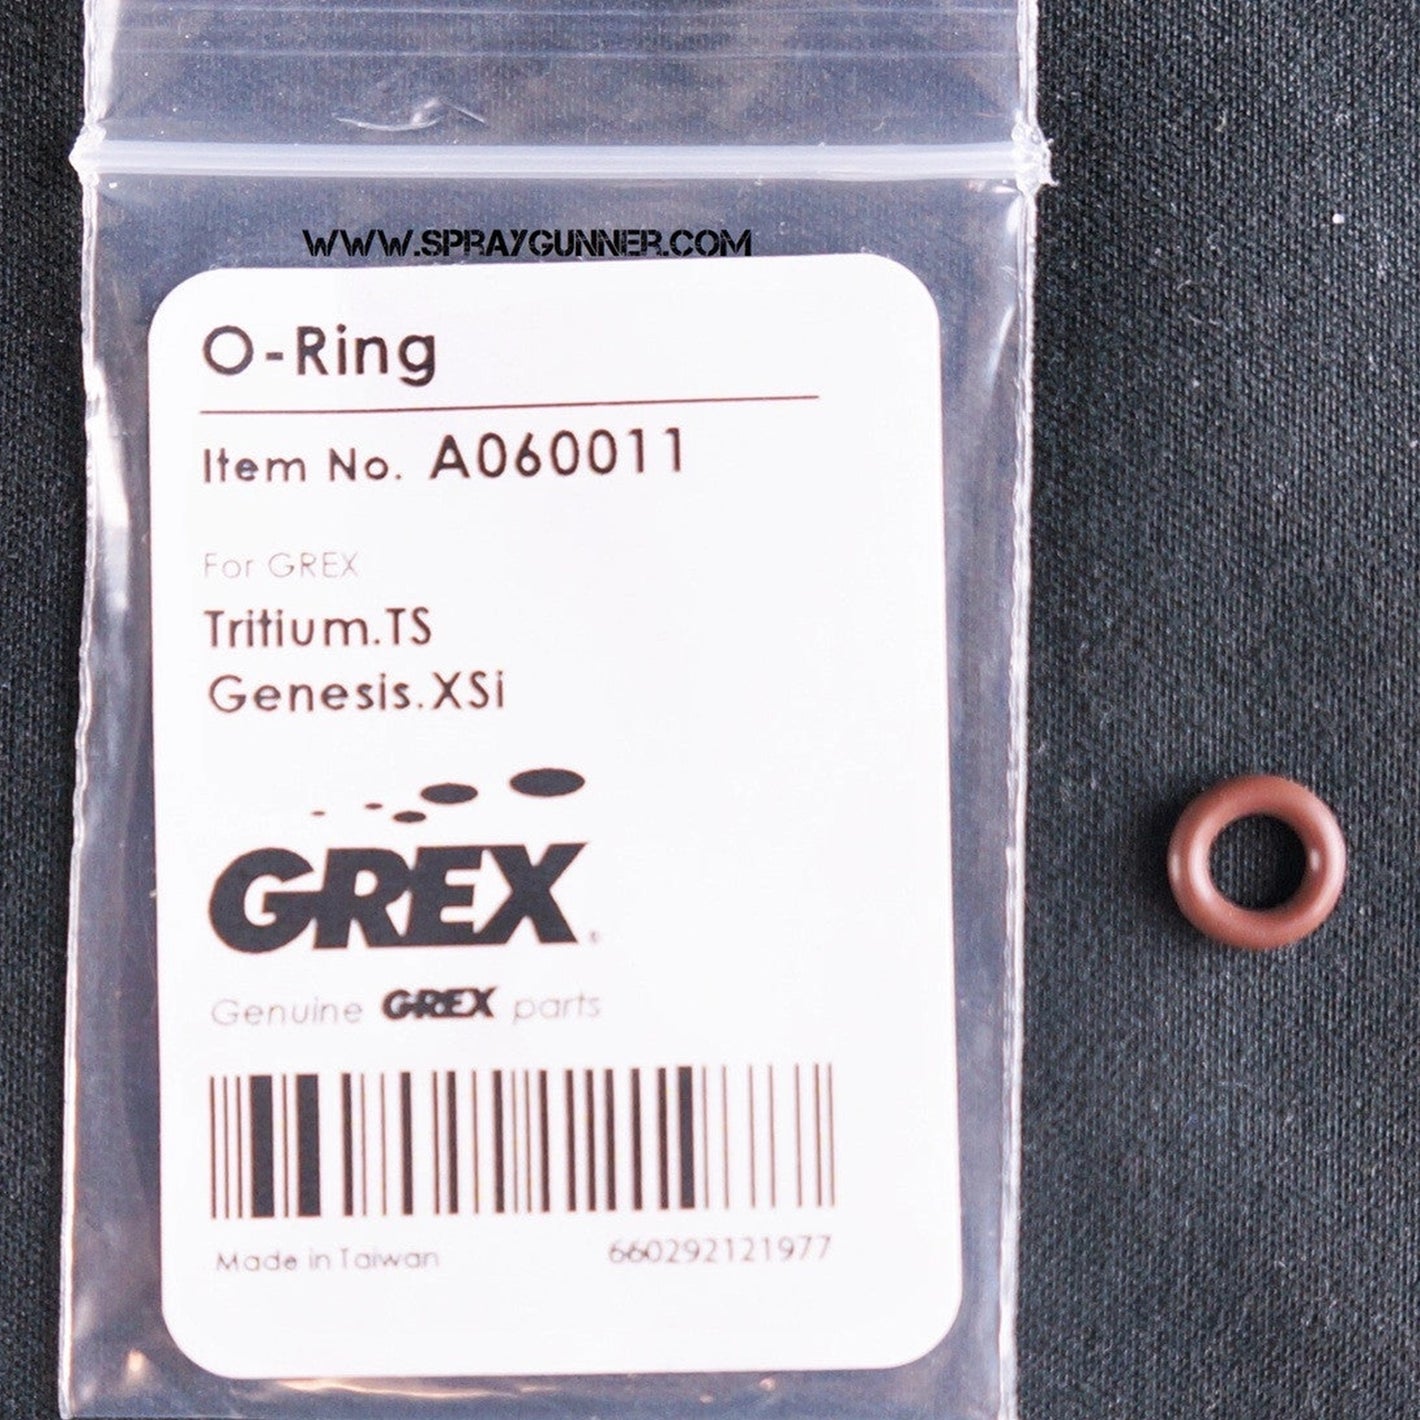 Grex O-Ring (A060011)